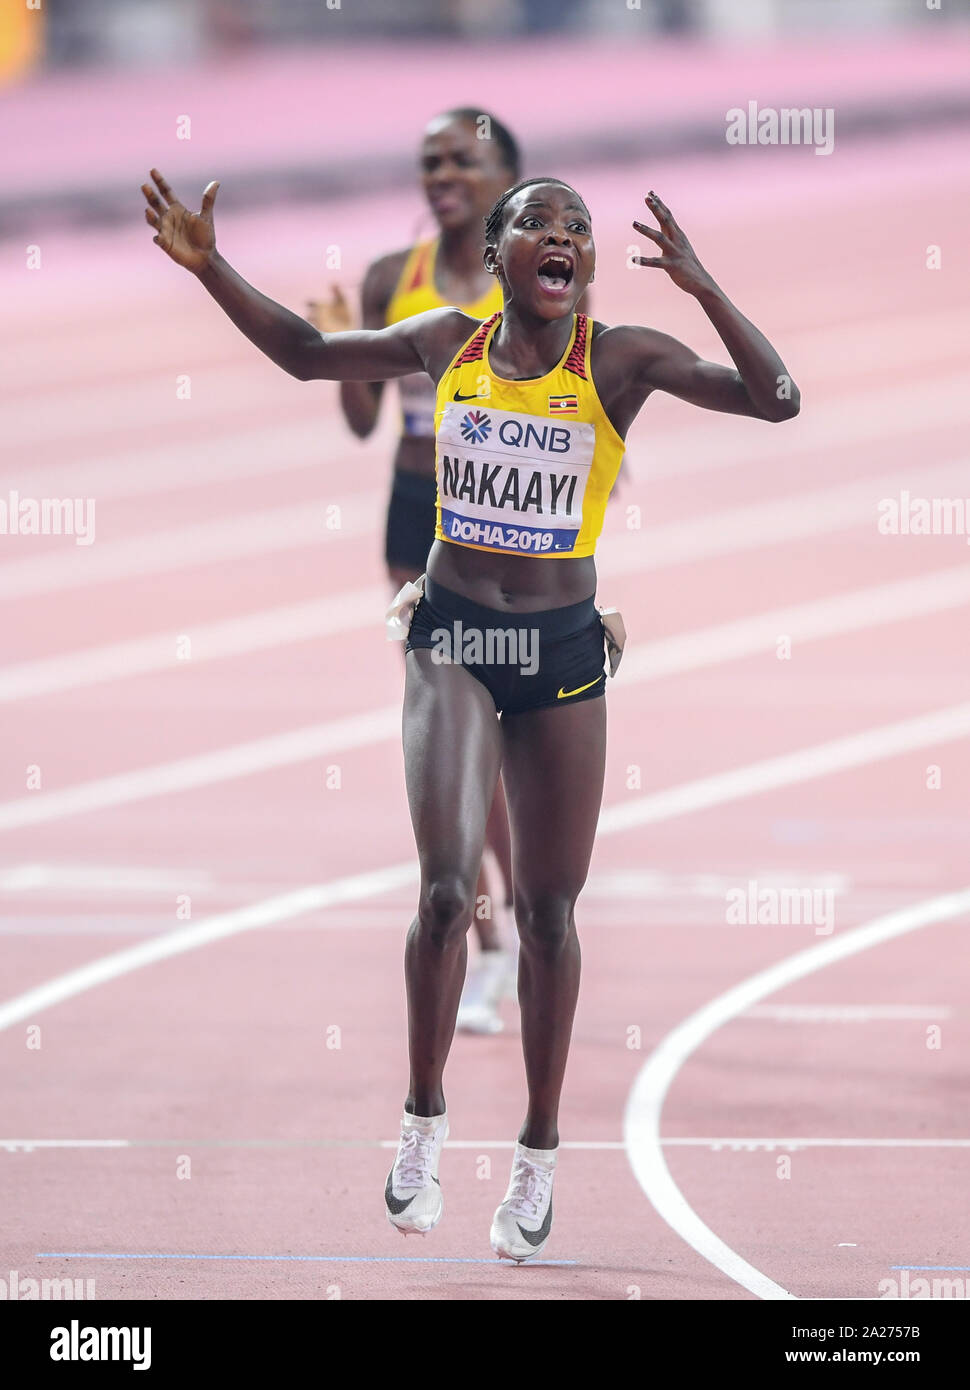 Halimah Nakaayi (Uganda). 800 Metres Gold Medal. IAAF World Athletics Championships, Doha 2019 Stock Photo